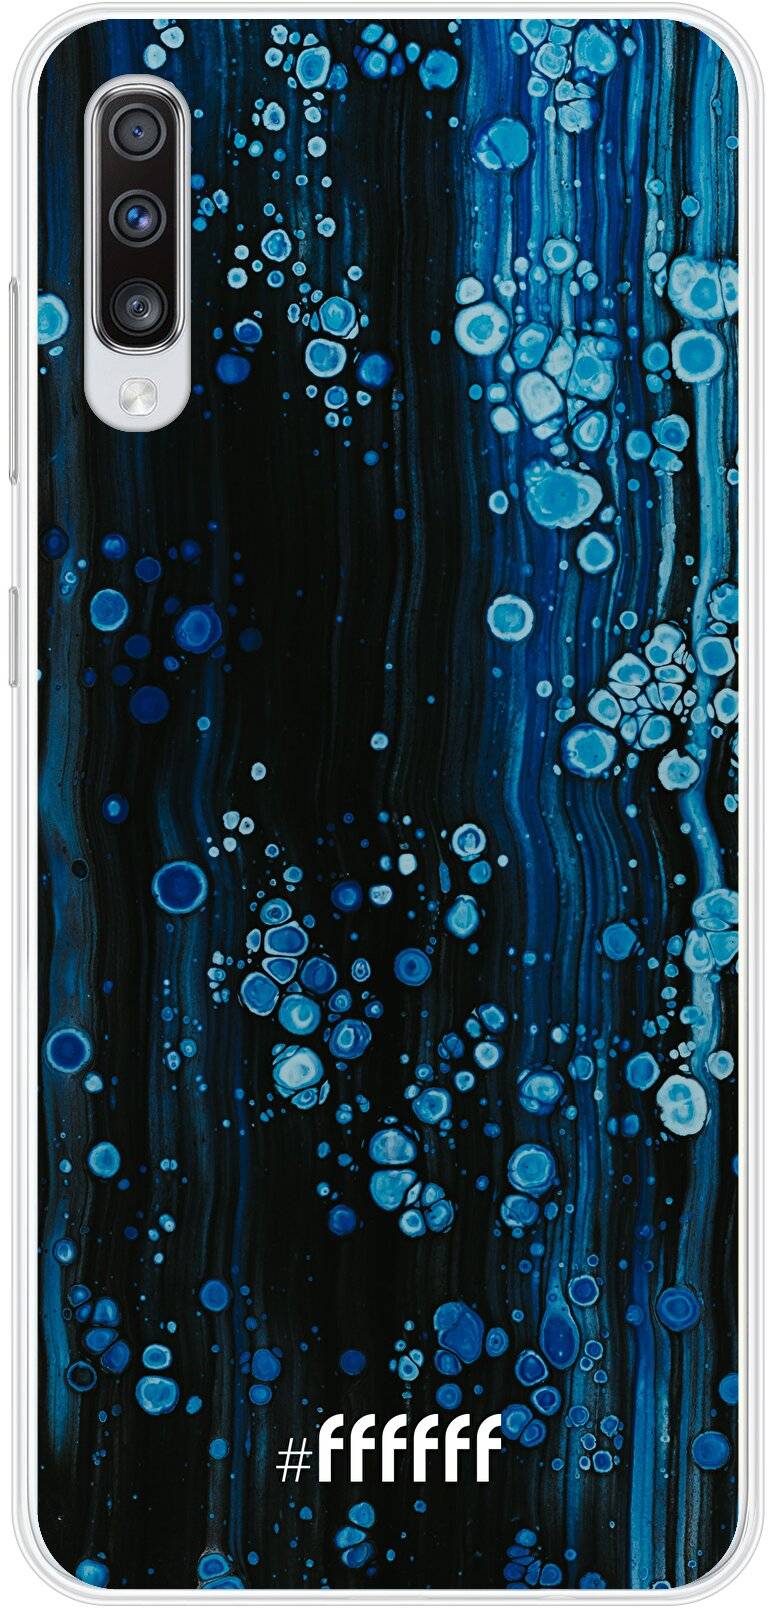 Bubbling Blues Galaxy A70